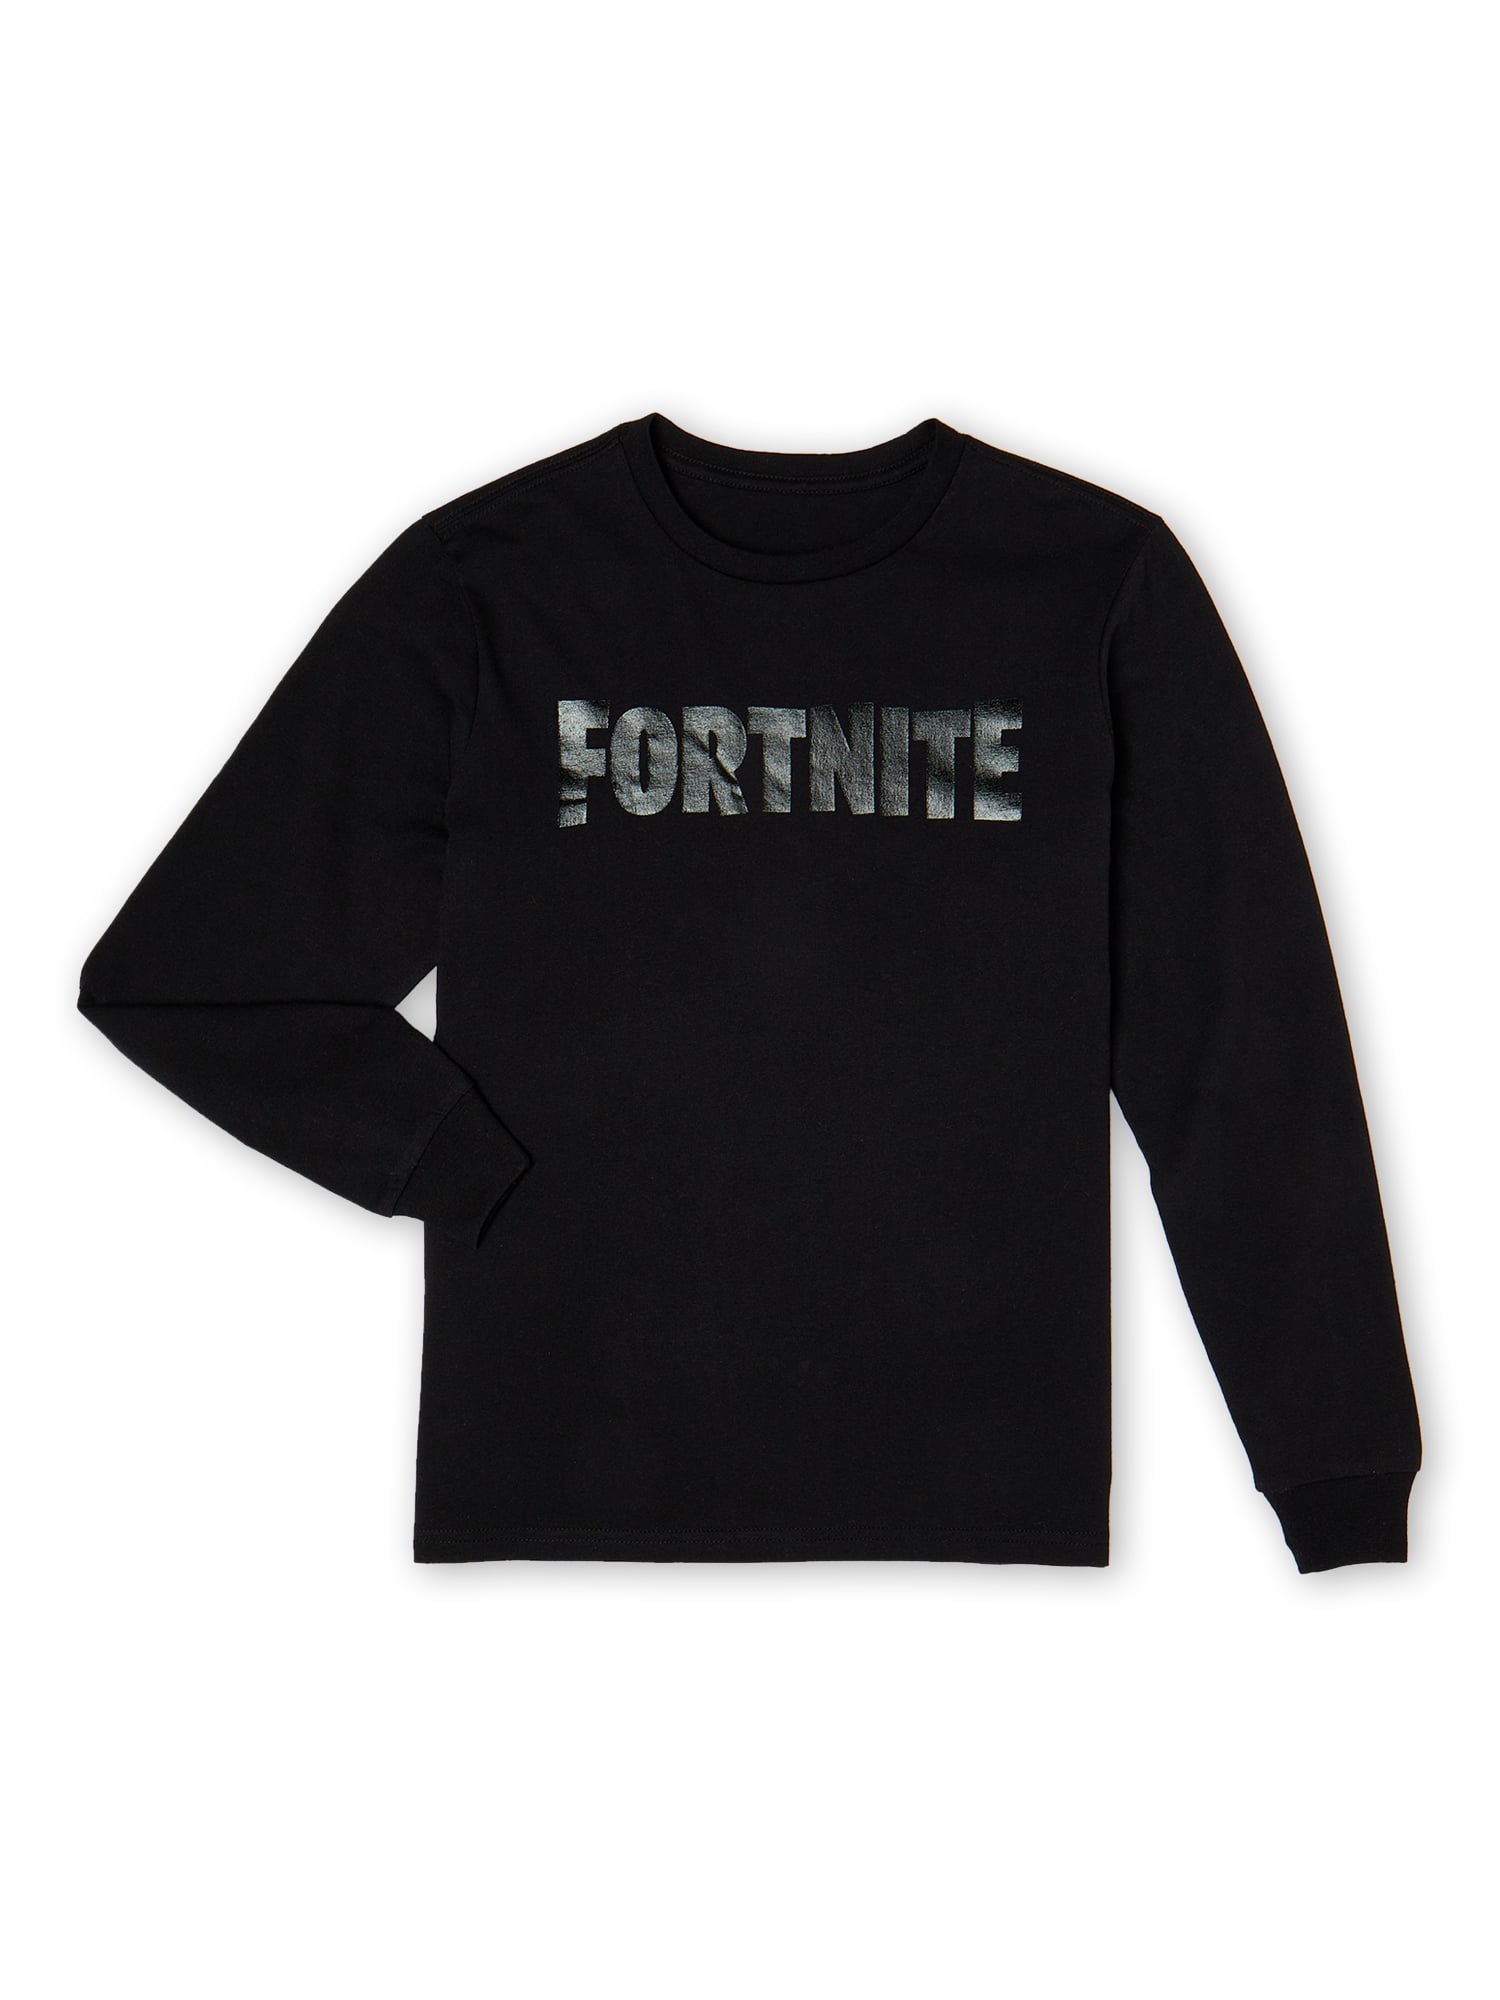 Black Fortnite Long Sleeve T-Shirt